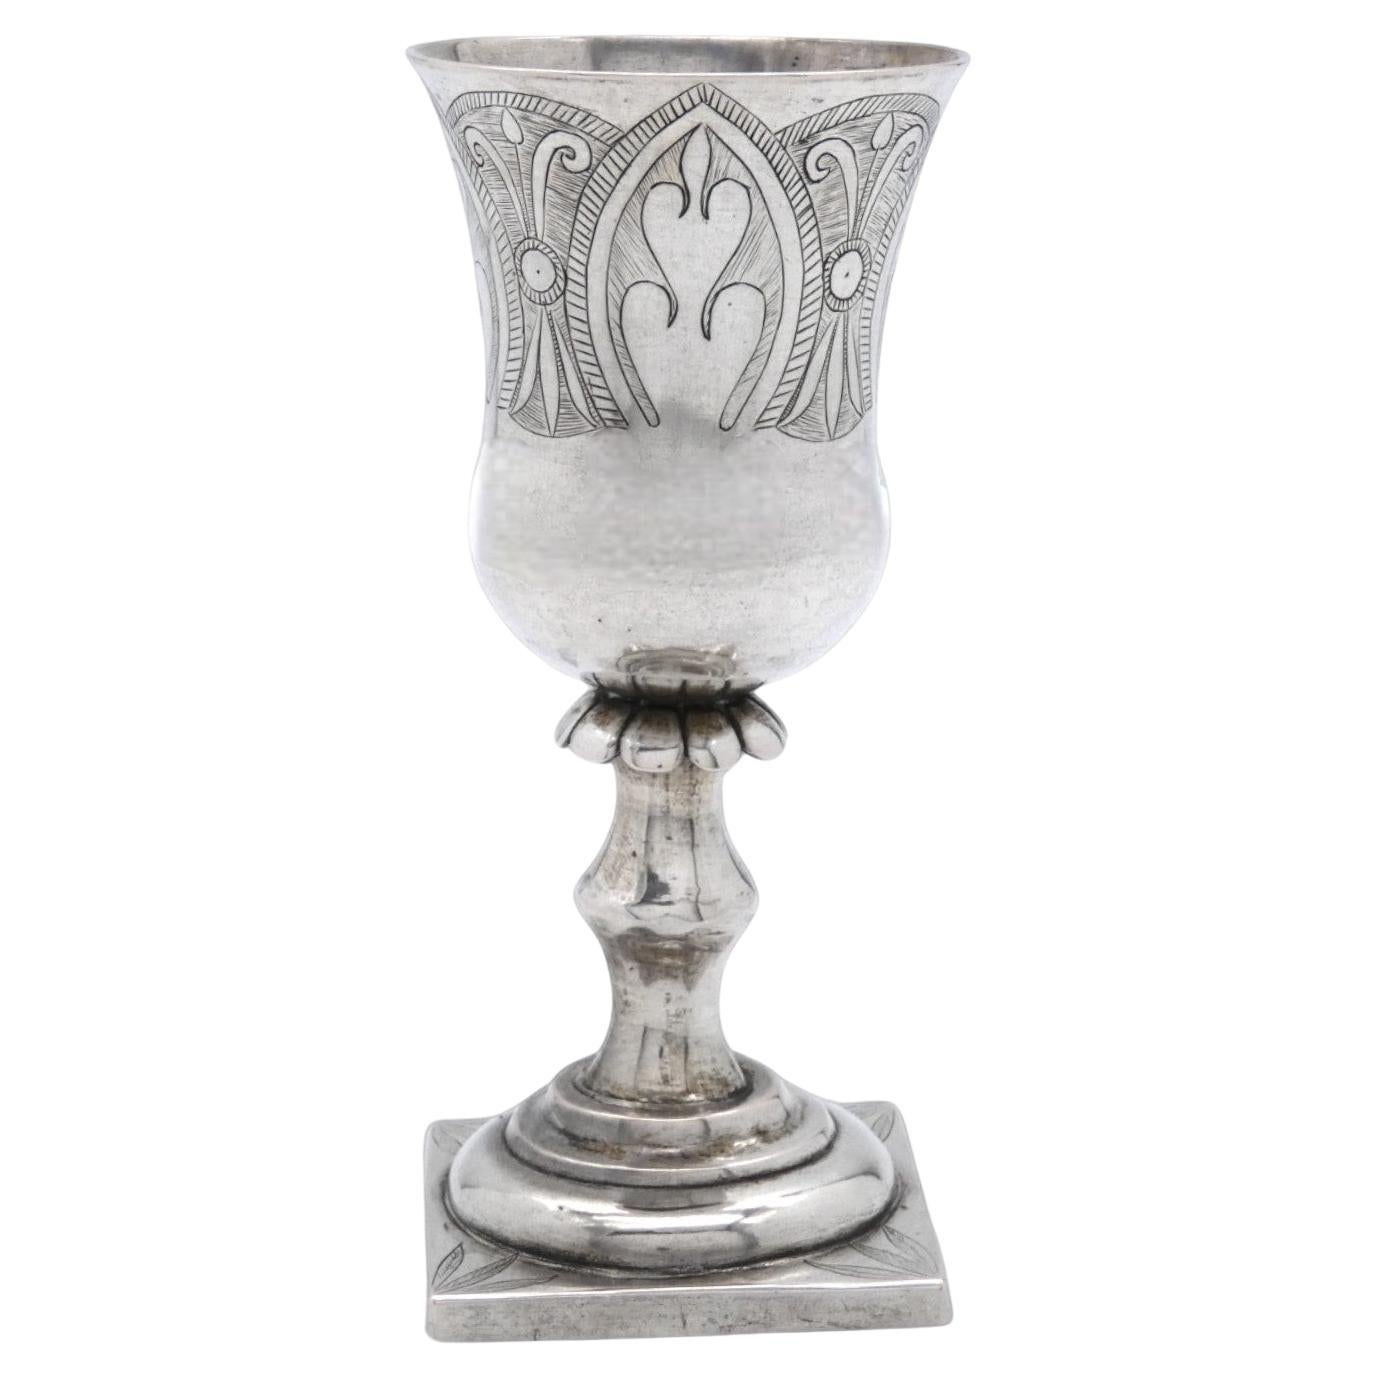 A Silver Kiddush Goblet, Poland 19th Century